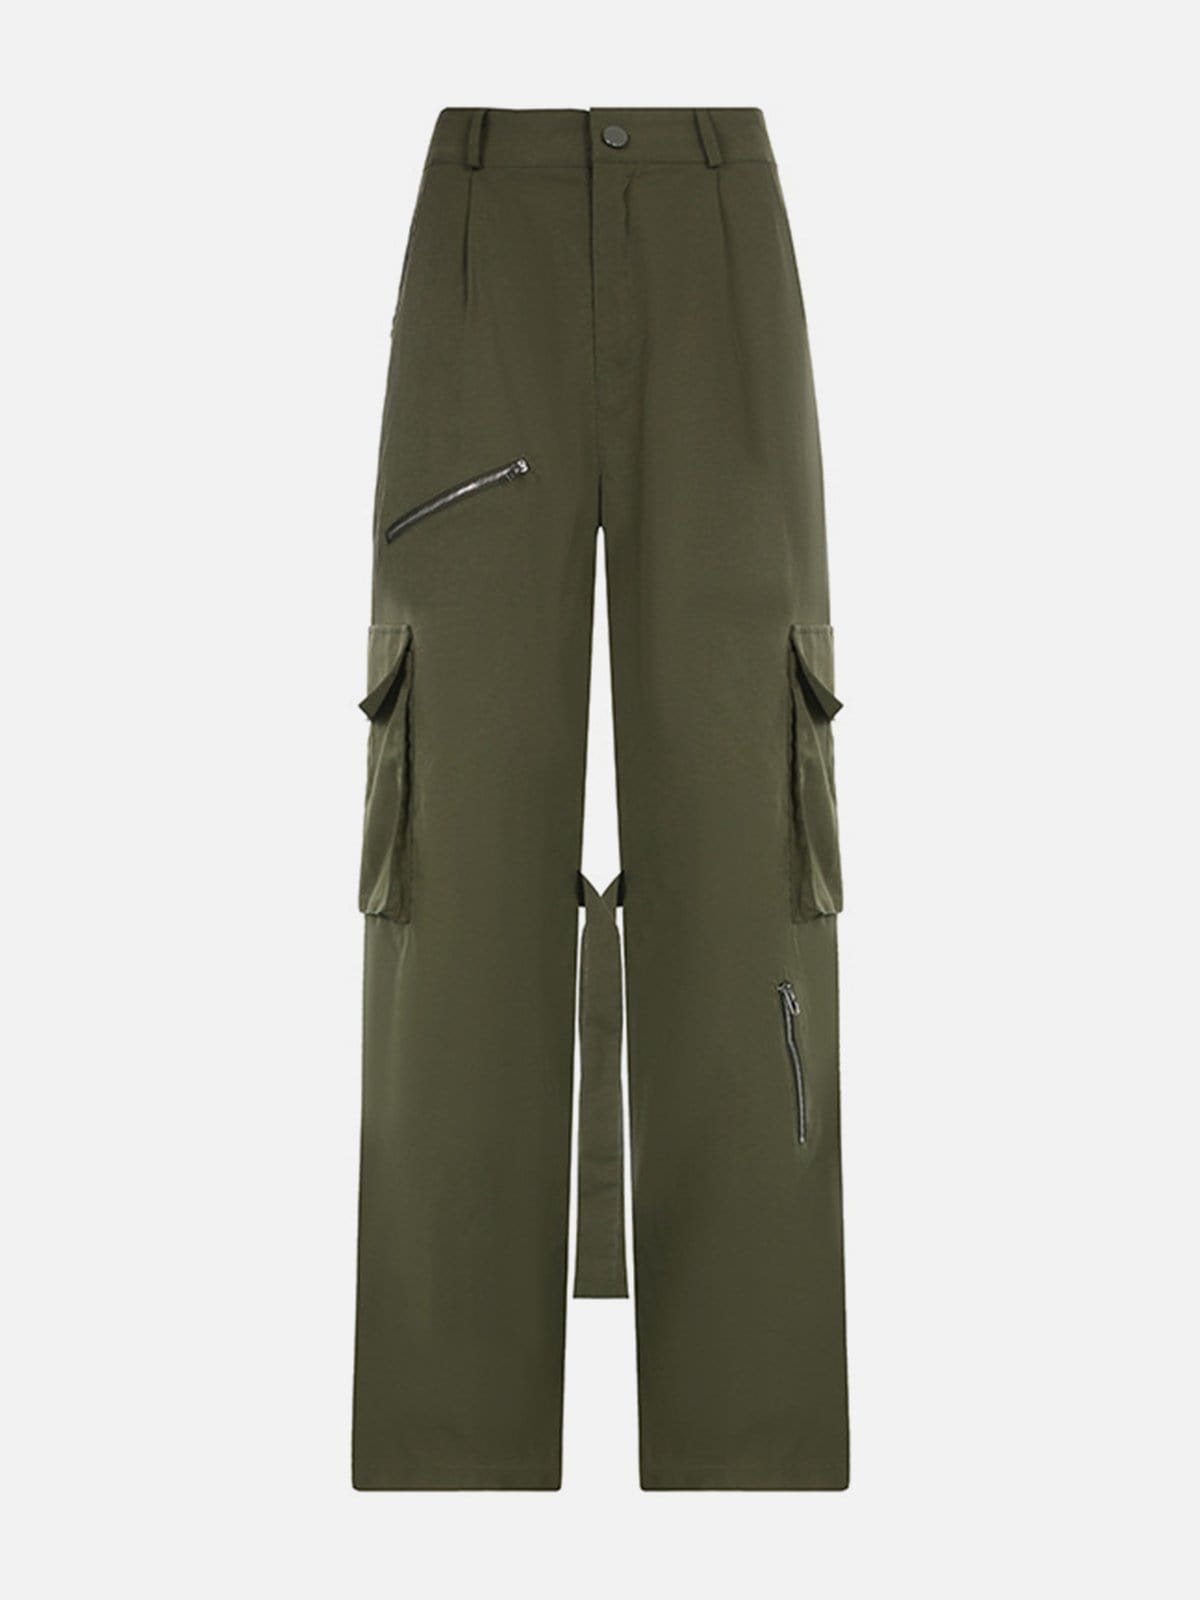 Asymmetrical Multi Pockets Cargo Pants Streetwear Brand Techwear Combat Tactical YUGEN THEORY